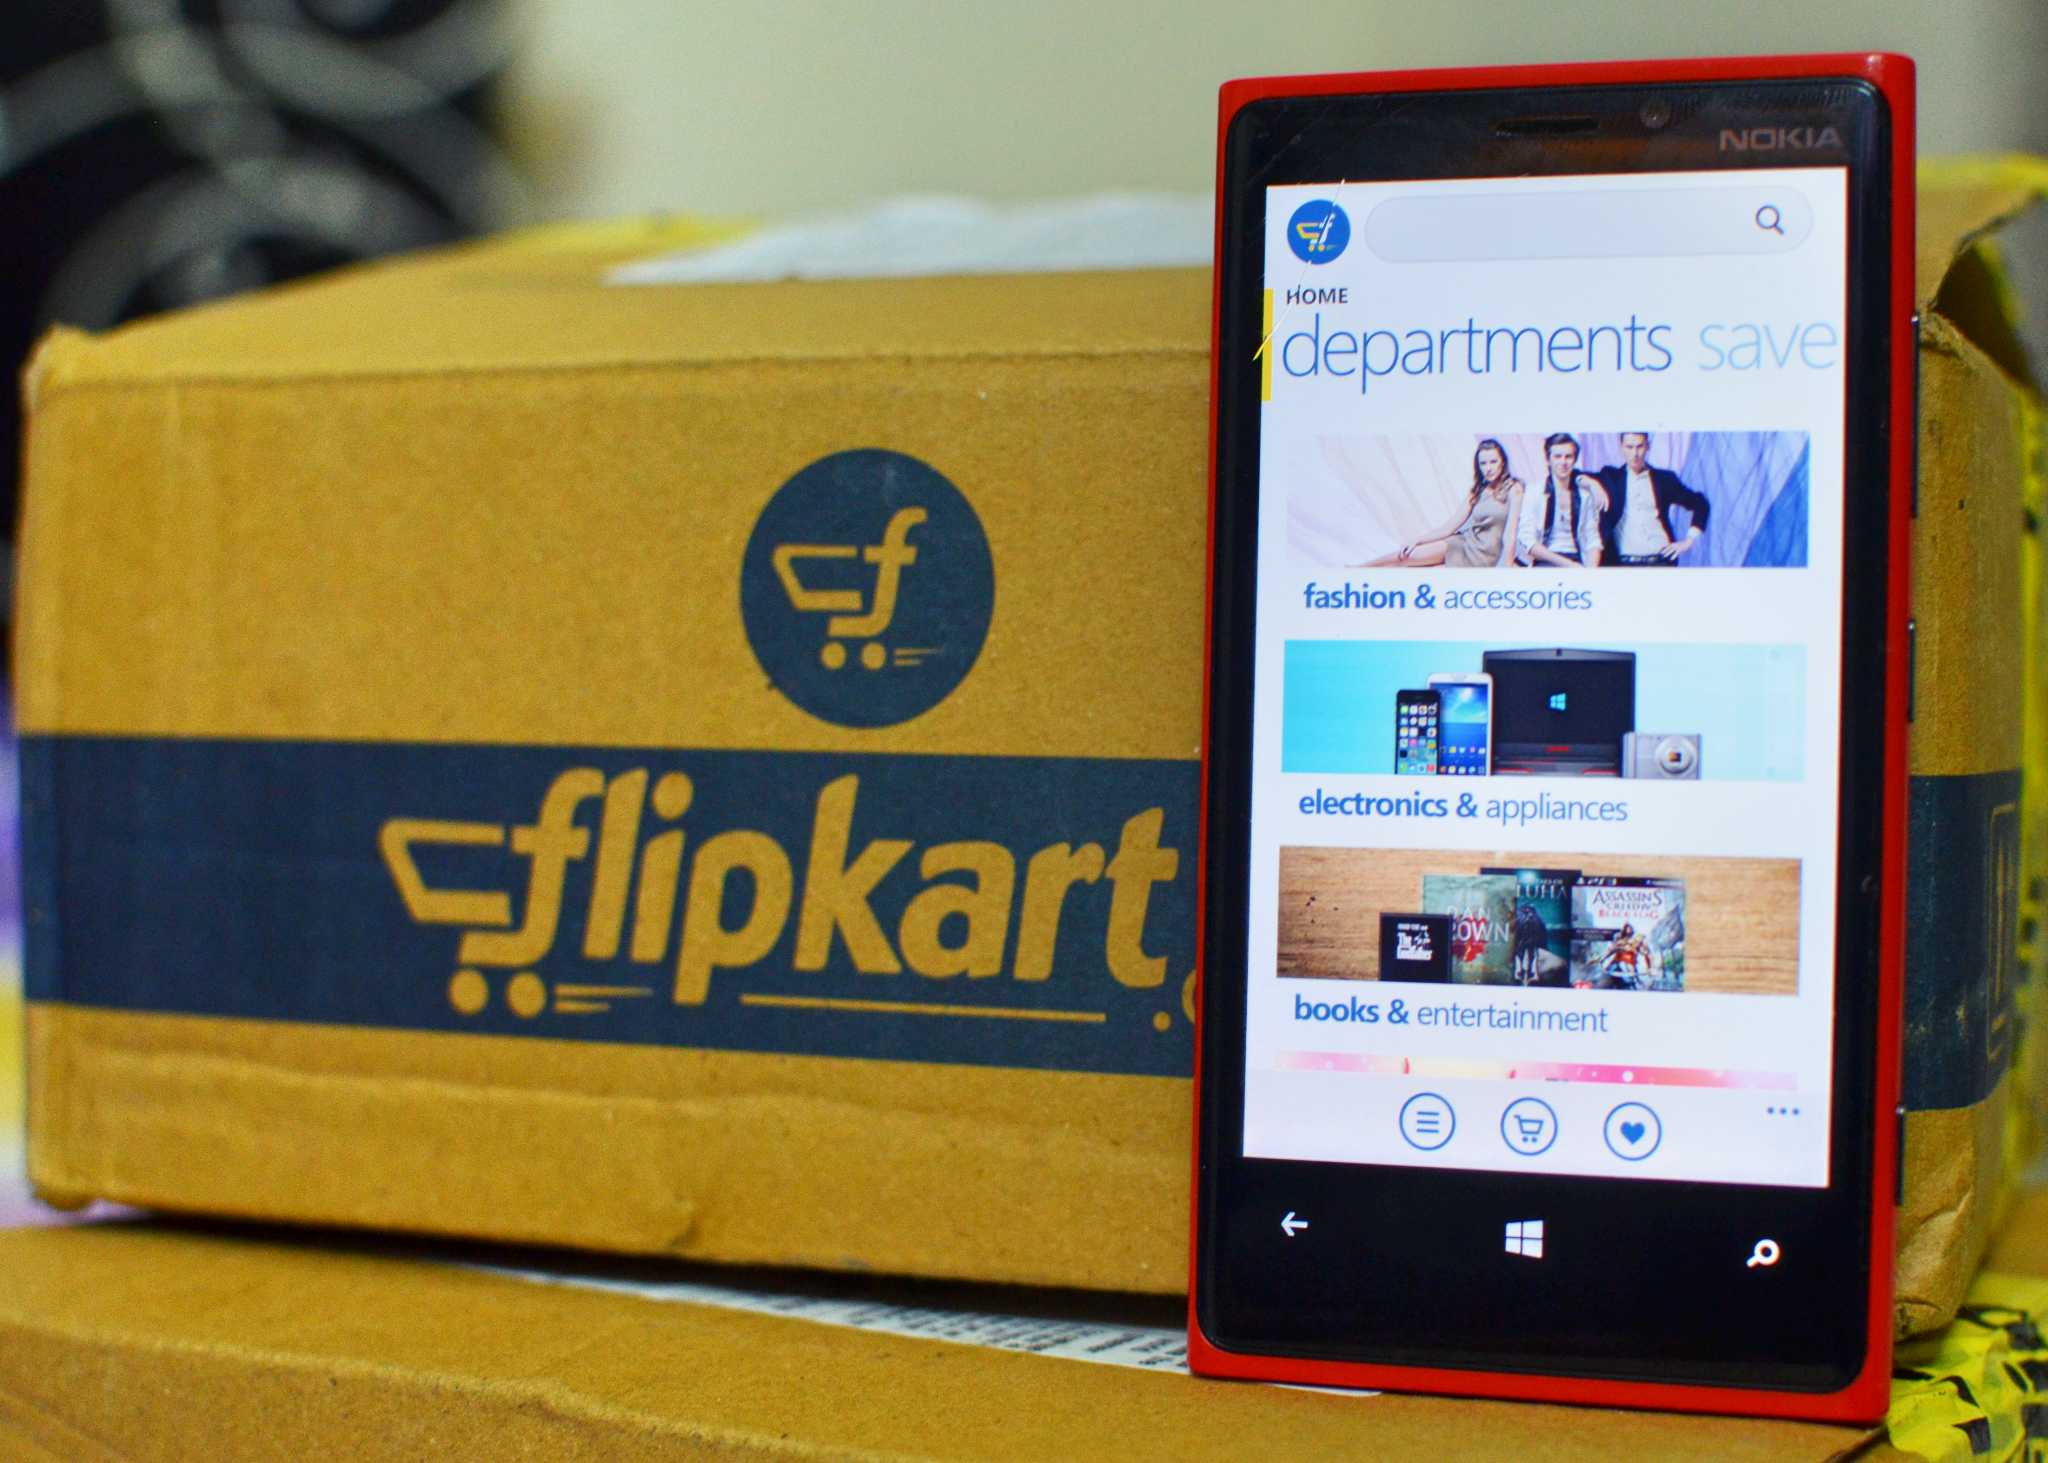 Official Flipkart Windows Phone app updated, adds push notifications